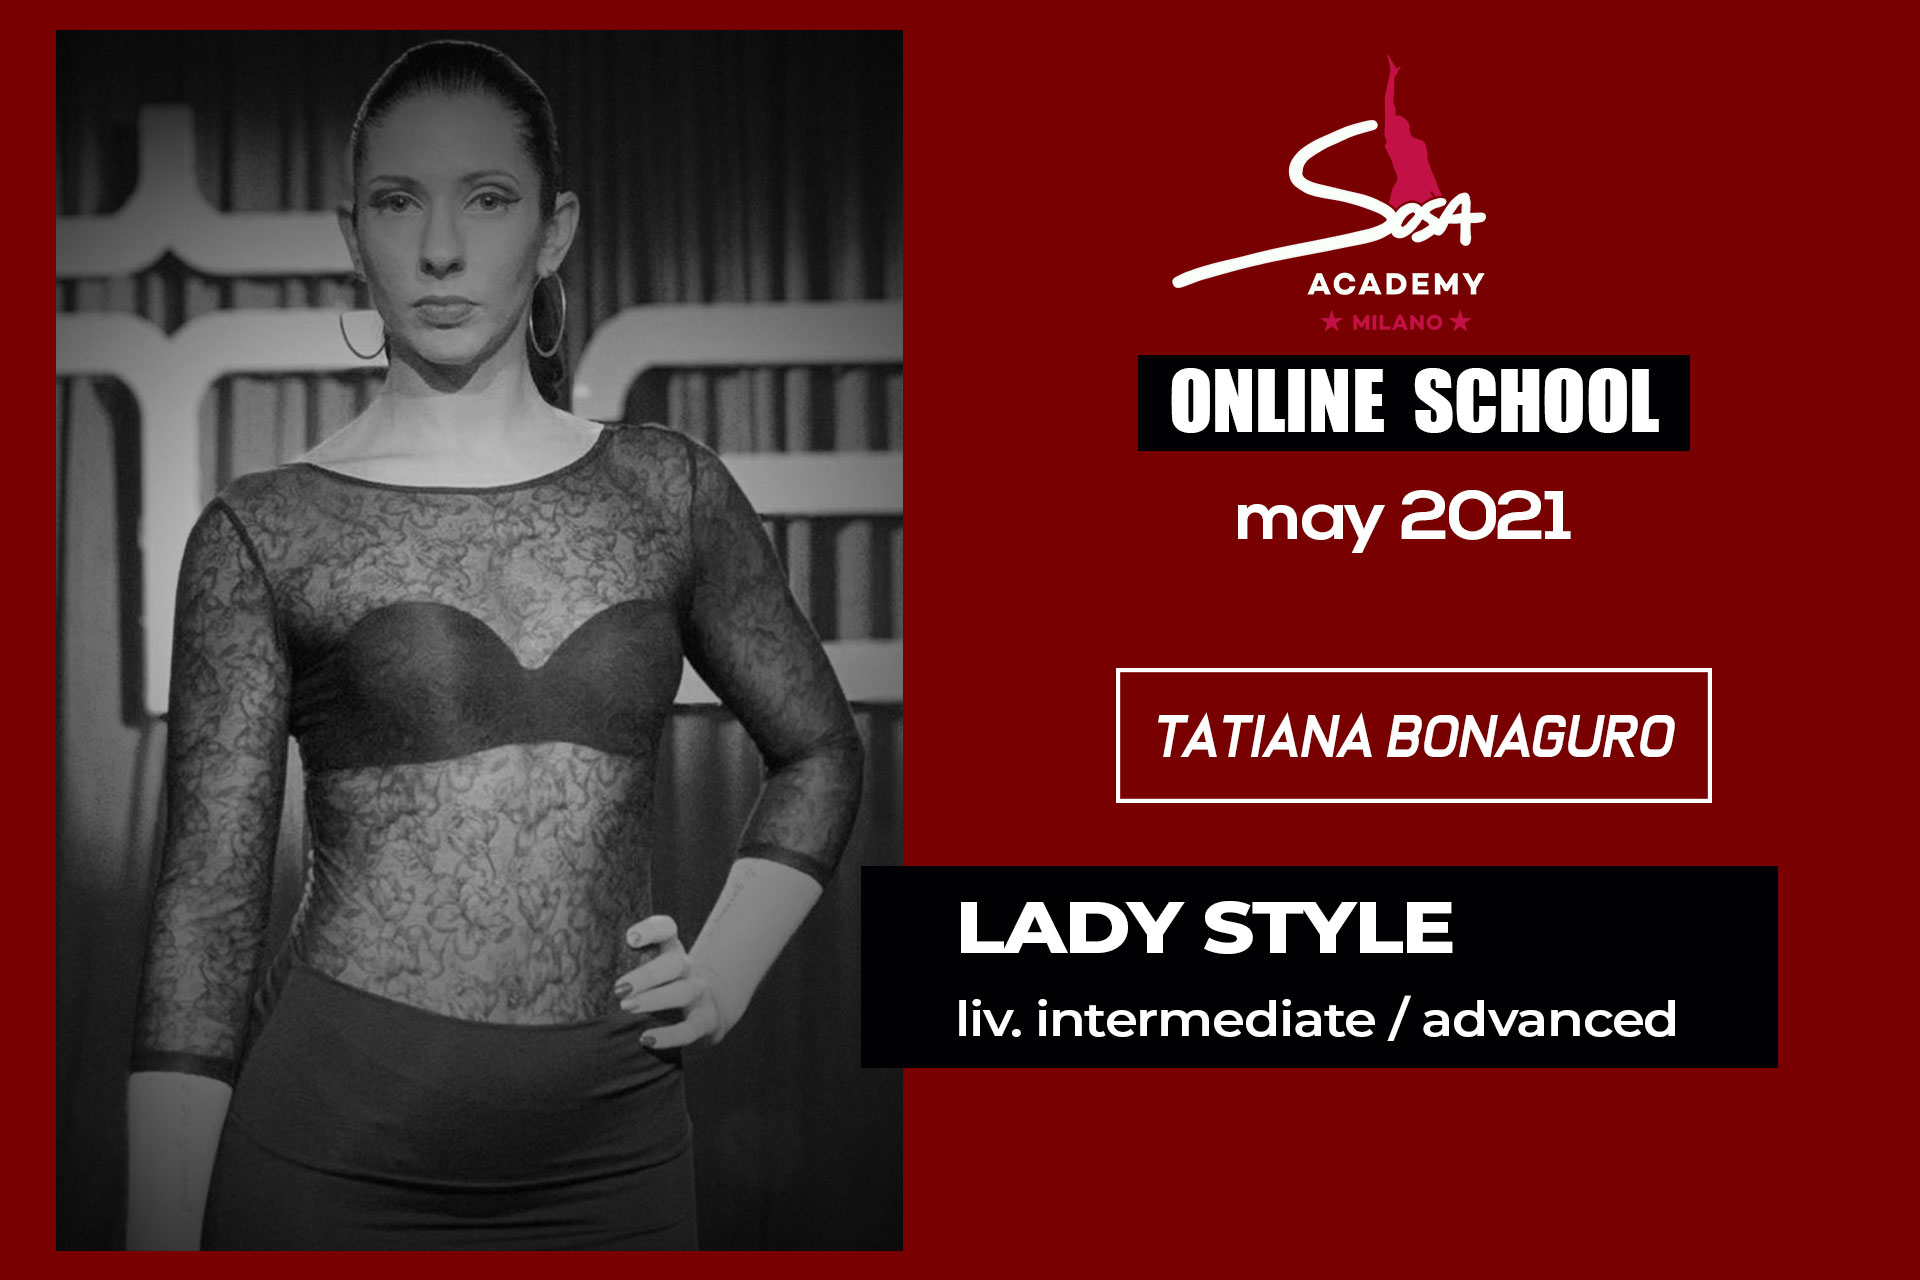 Lady Style lev. Int/Adv